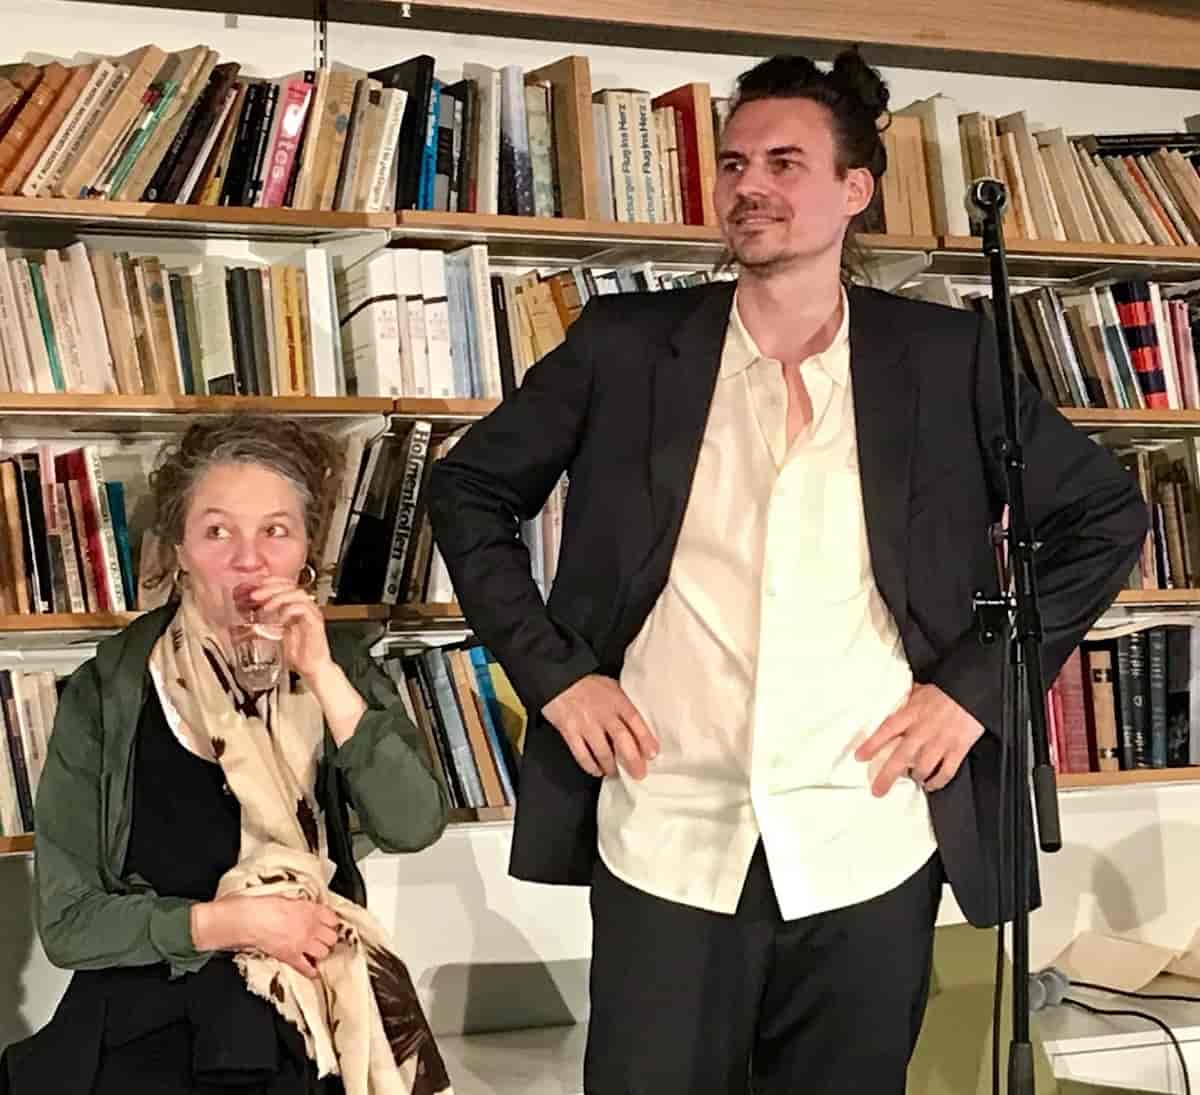 Melinda Nadj Abonji og Jurzock 1001 på Tysk-norsk litteraturfestival i Oslo 26.-28.4.2019